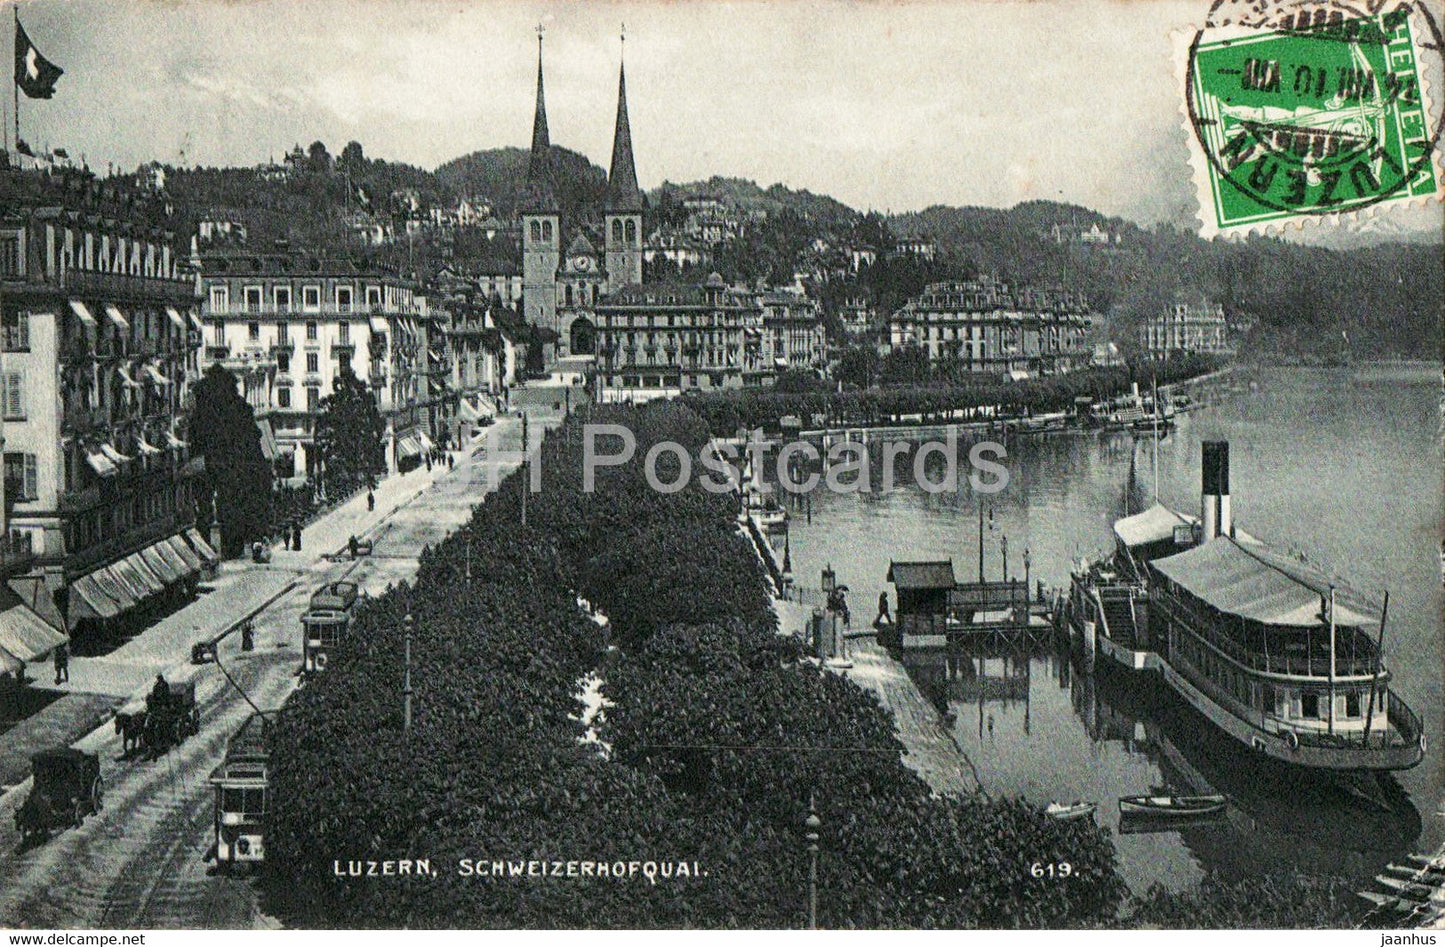 Luzern - Lucerne - Schweizerhofquai - 619 - tram - boat - steamer - ship - old postcard - 1910 - Switzerland - used - JH Postcards